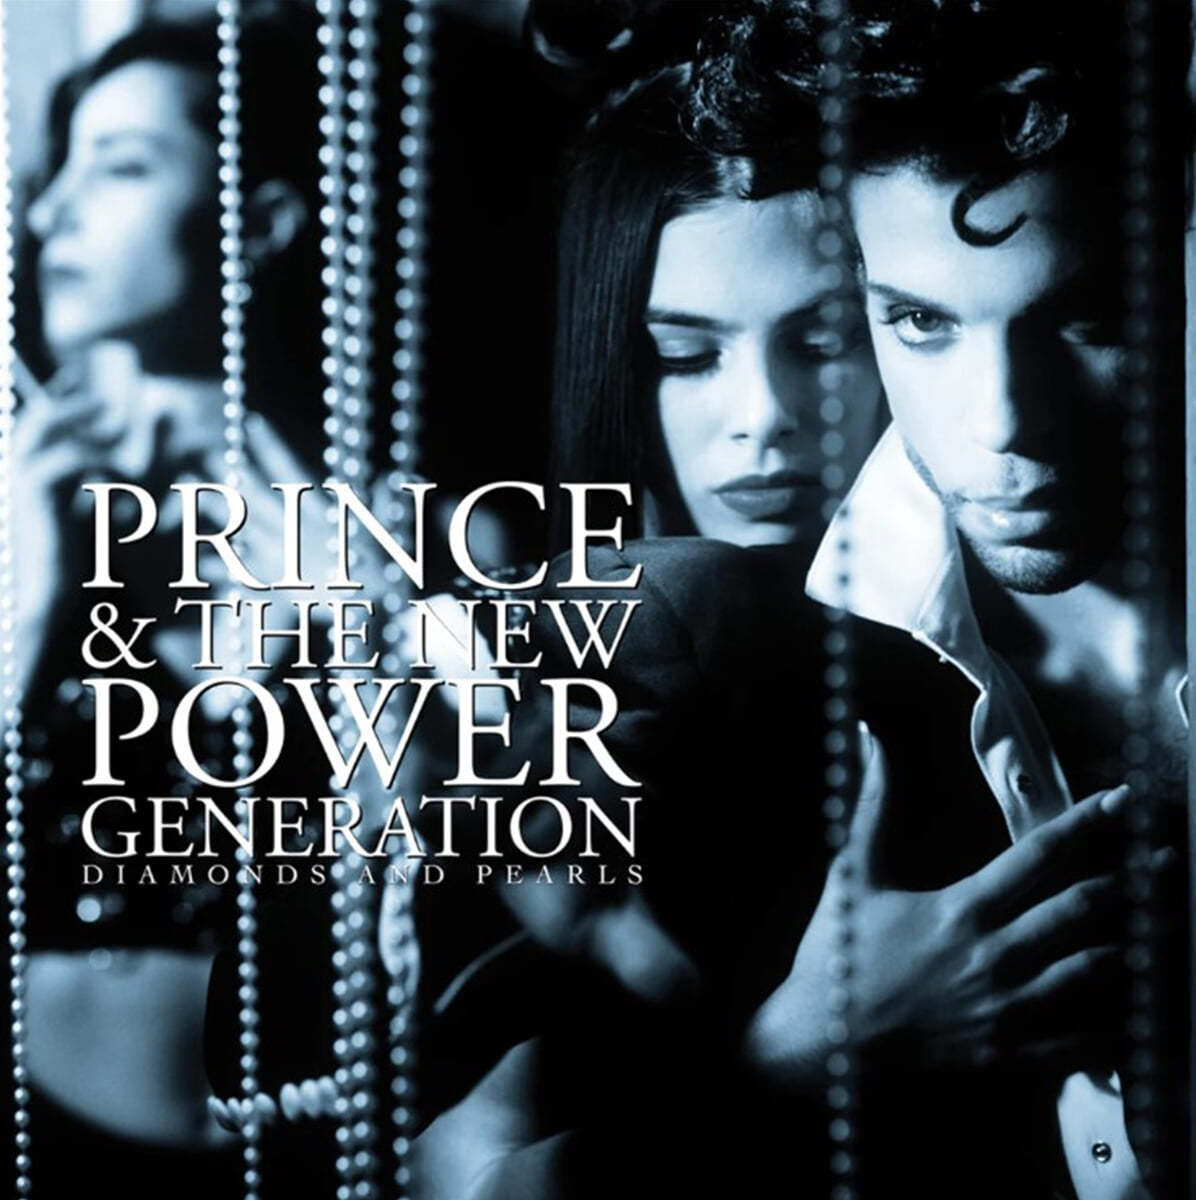 Prince & The New Power Generation (프린스 & 뉴 파워 제네레이션) - Diamonds And Pearls [2LP]